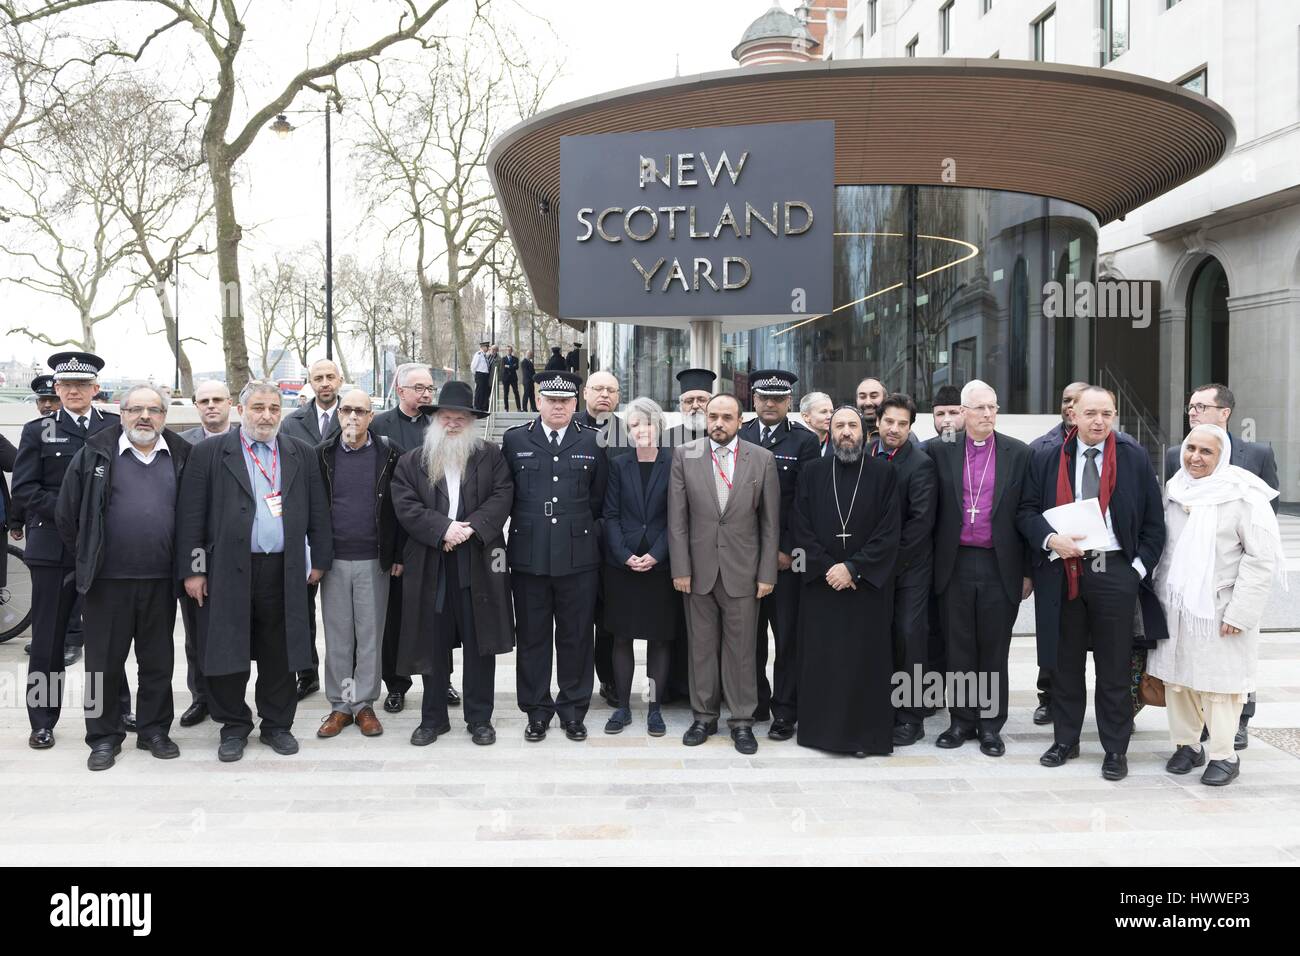 London, UK. 23rd Mar, 2017. All Religious Leaders give statement outside New Scotland Yard. London UK  Credit: dpa/Alamy Live News Stock Photo